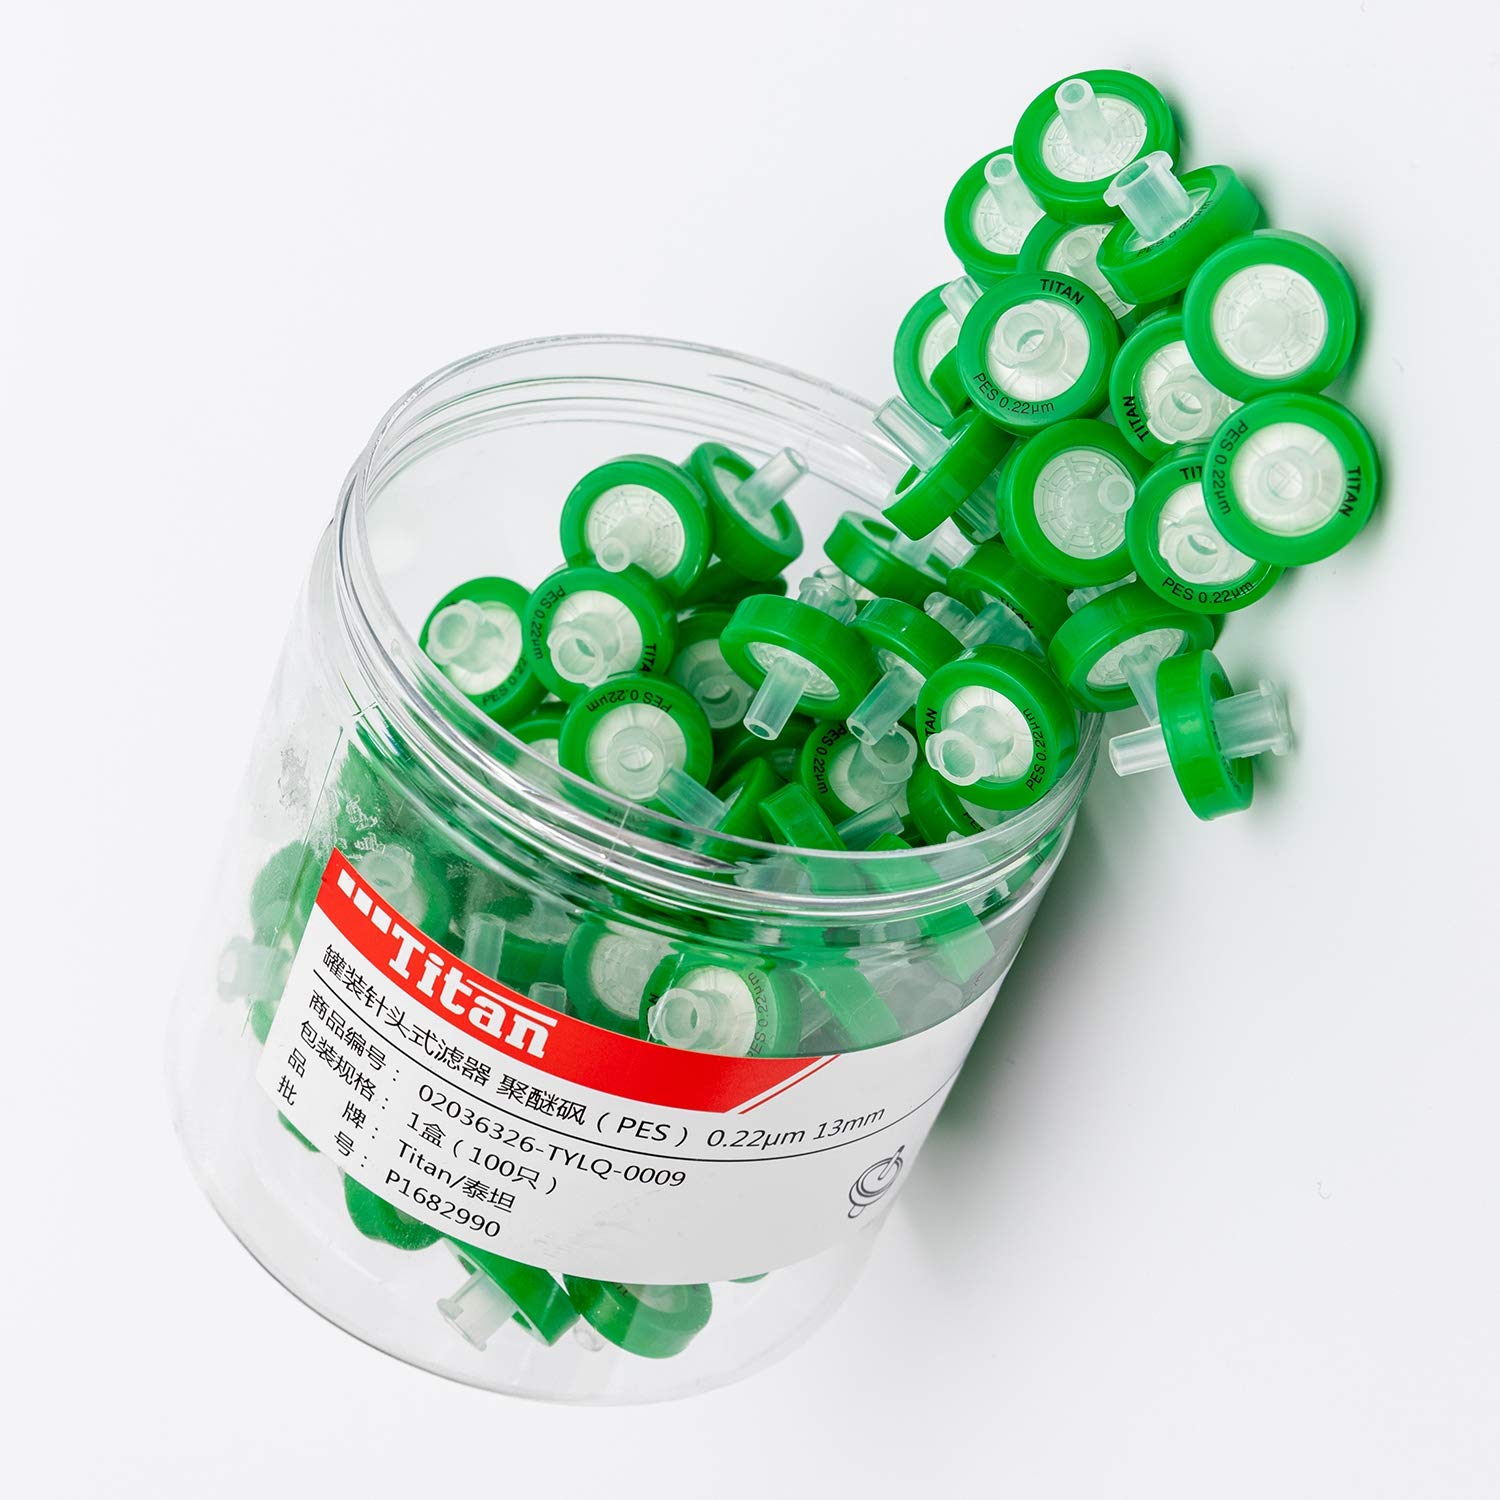 Adamas-Beta Syringe Filter,Syringe Lab Filters, PES (Polyethersulfone) 25mm Diameter 0.45μm Pore Size,Non Sterile Filtration,Green